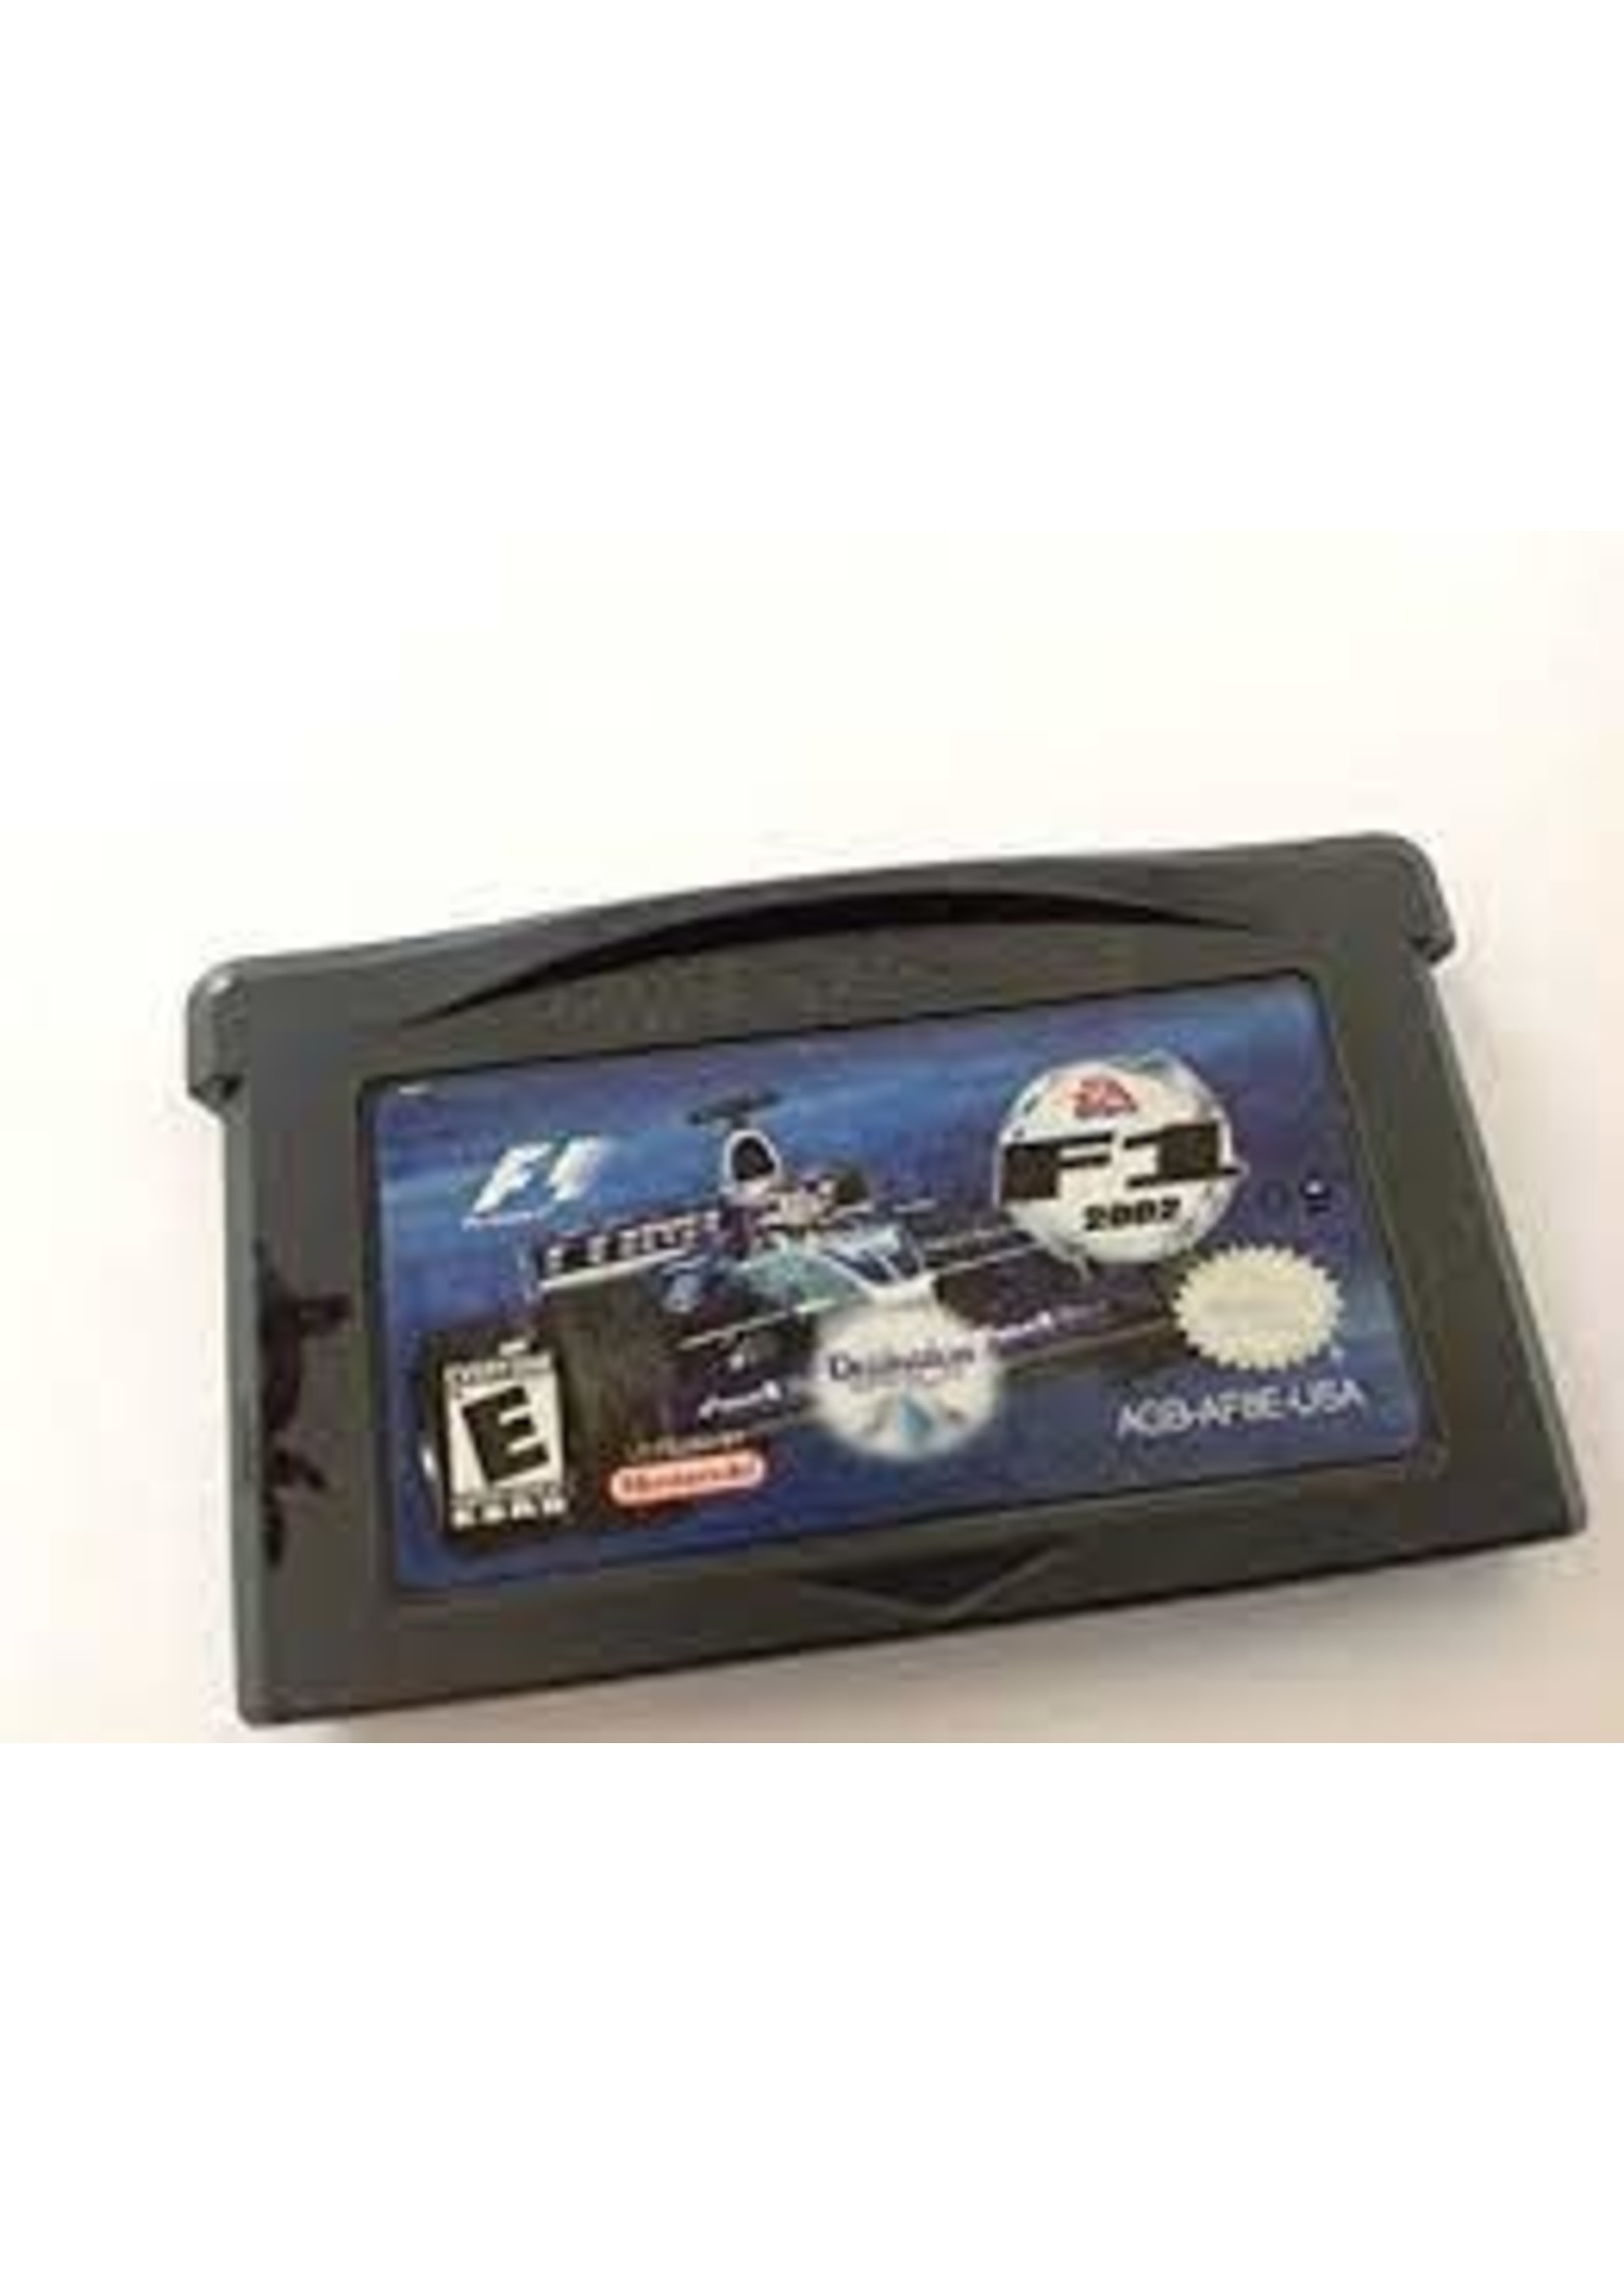 Nintendo Gameboy Advance F1 2002